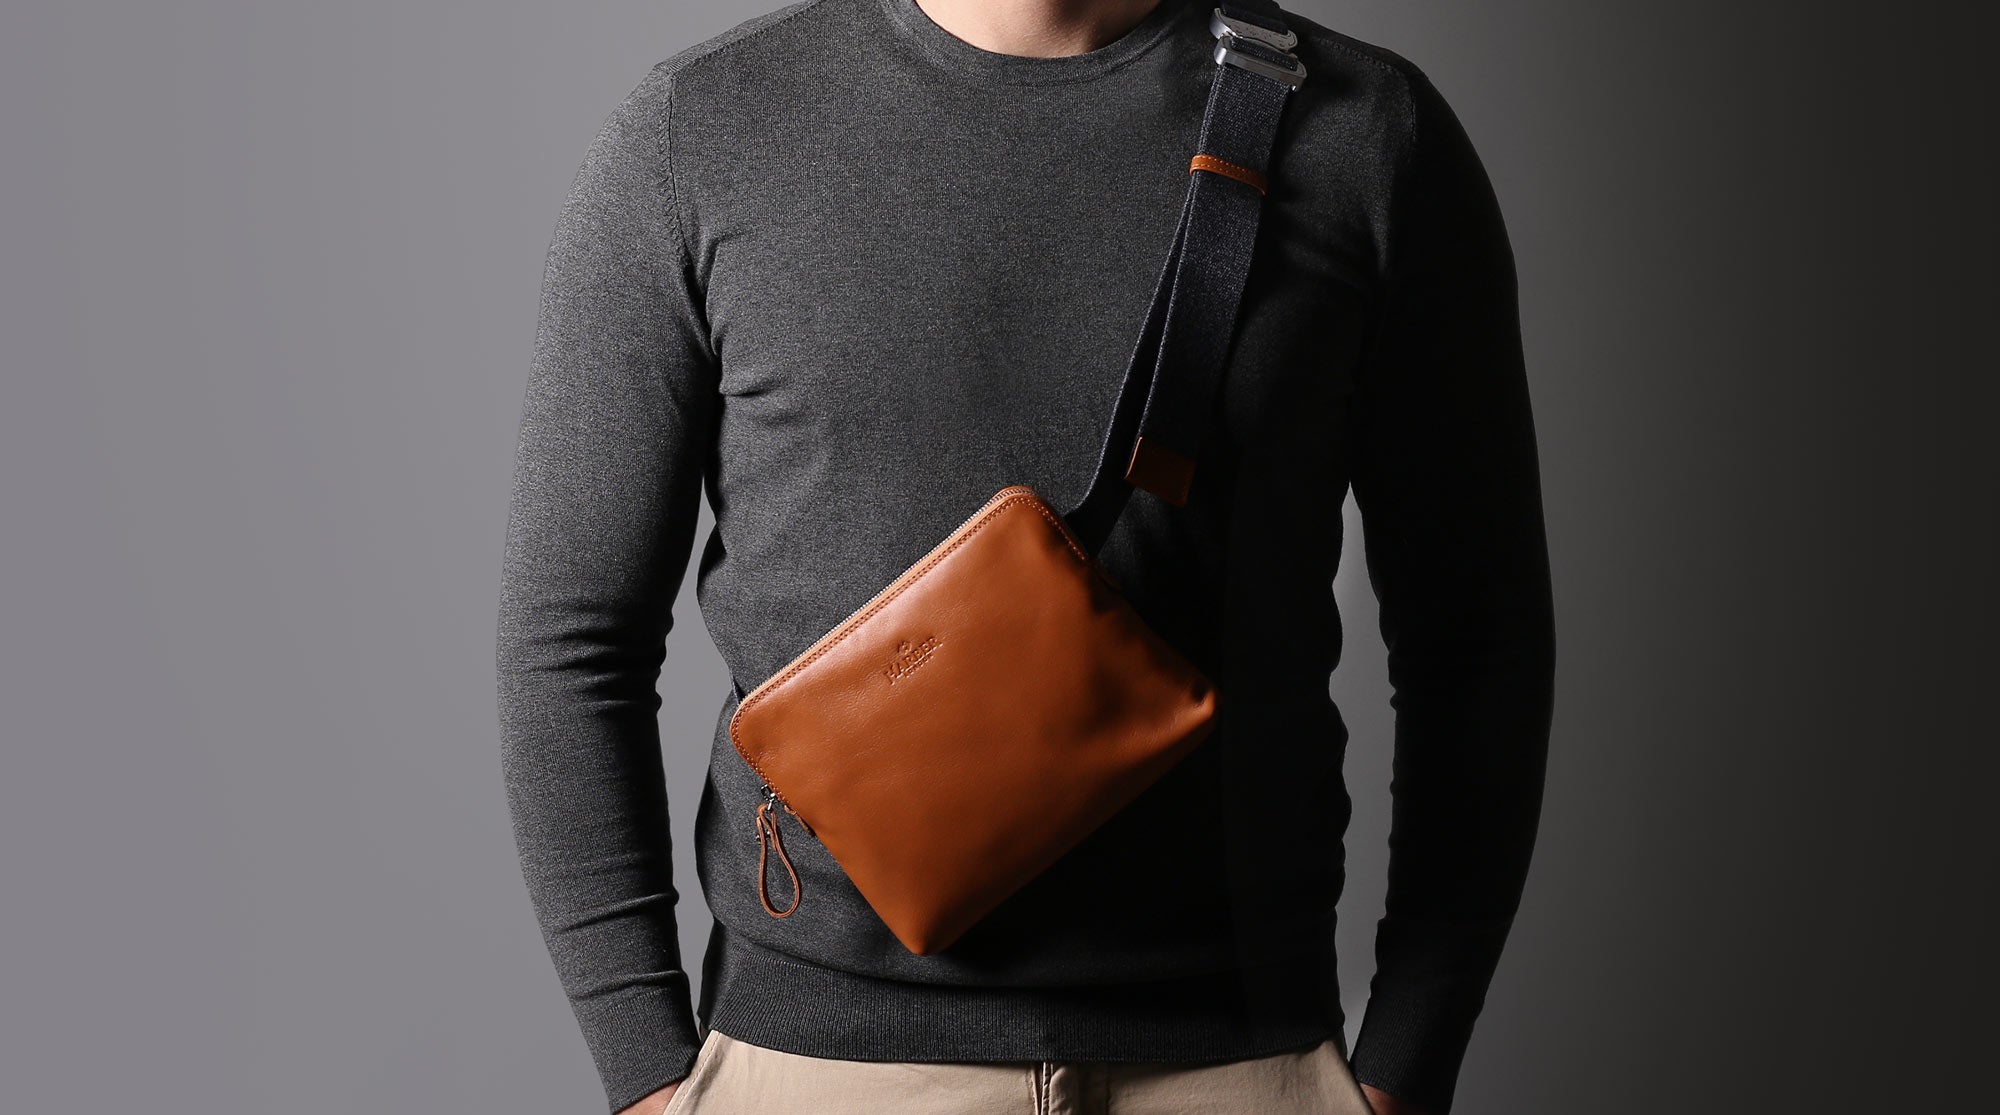 Premium leather sling bag